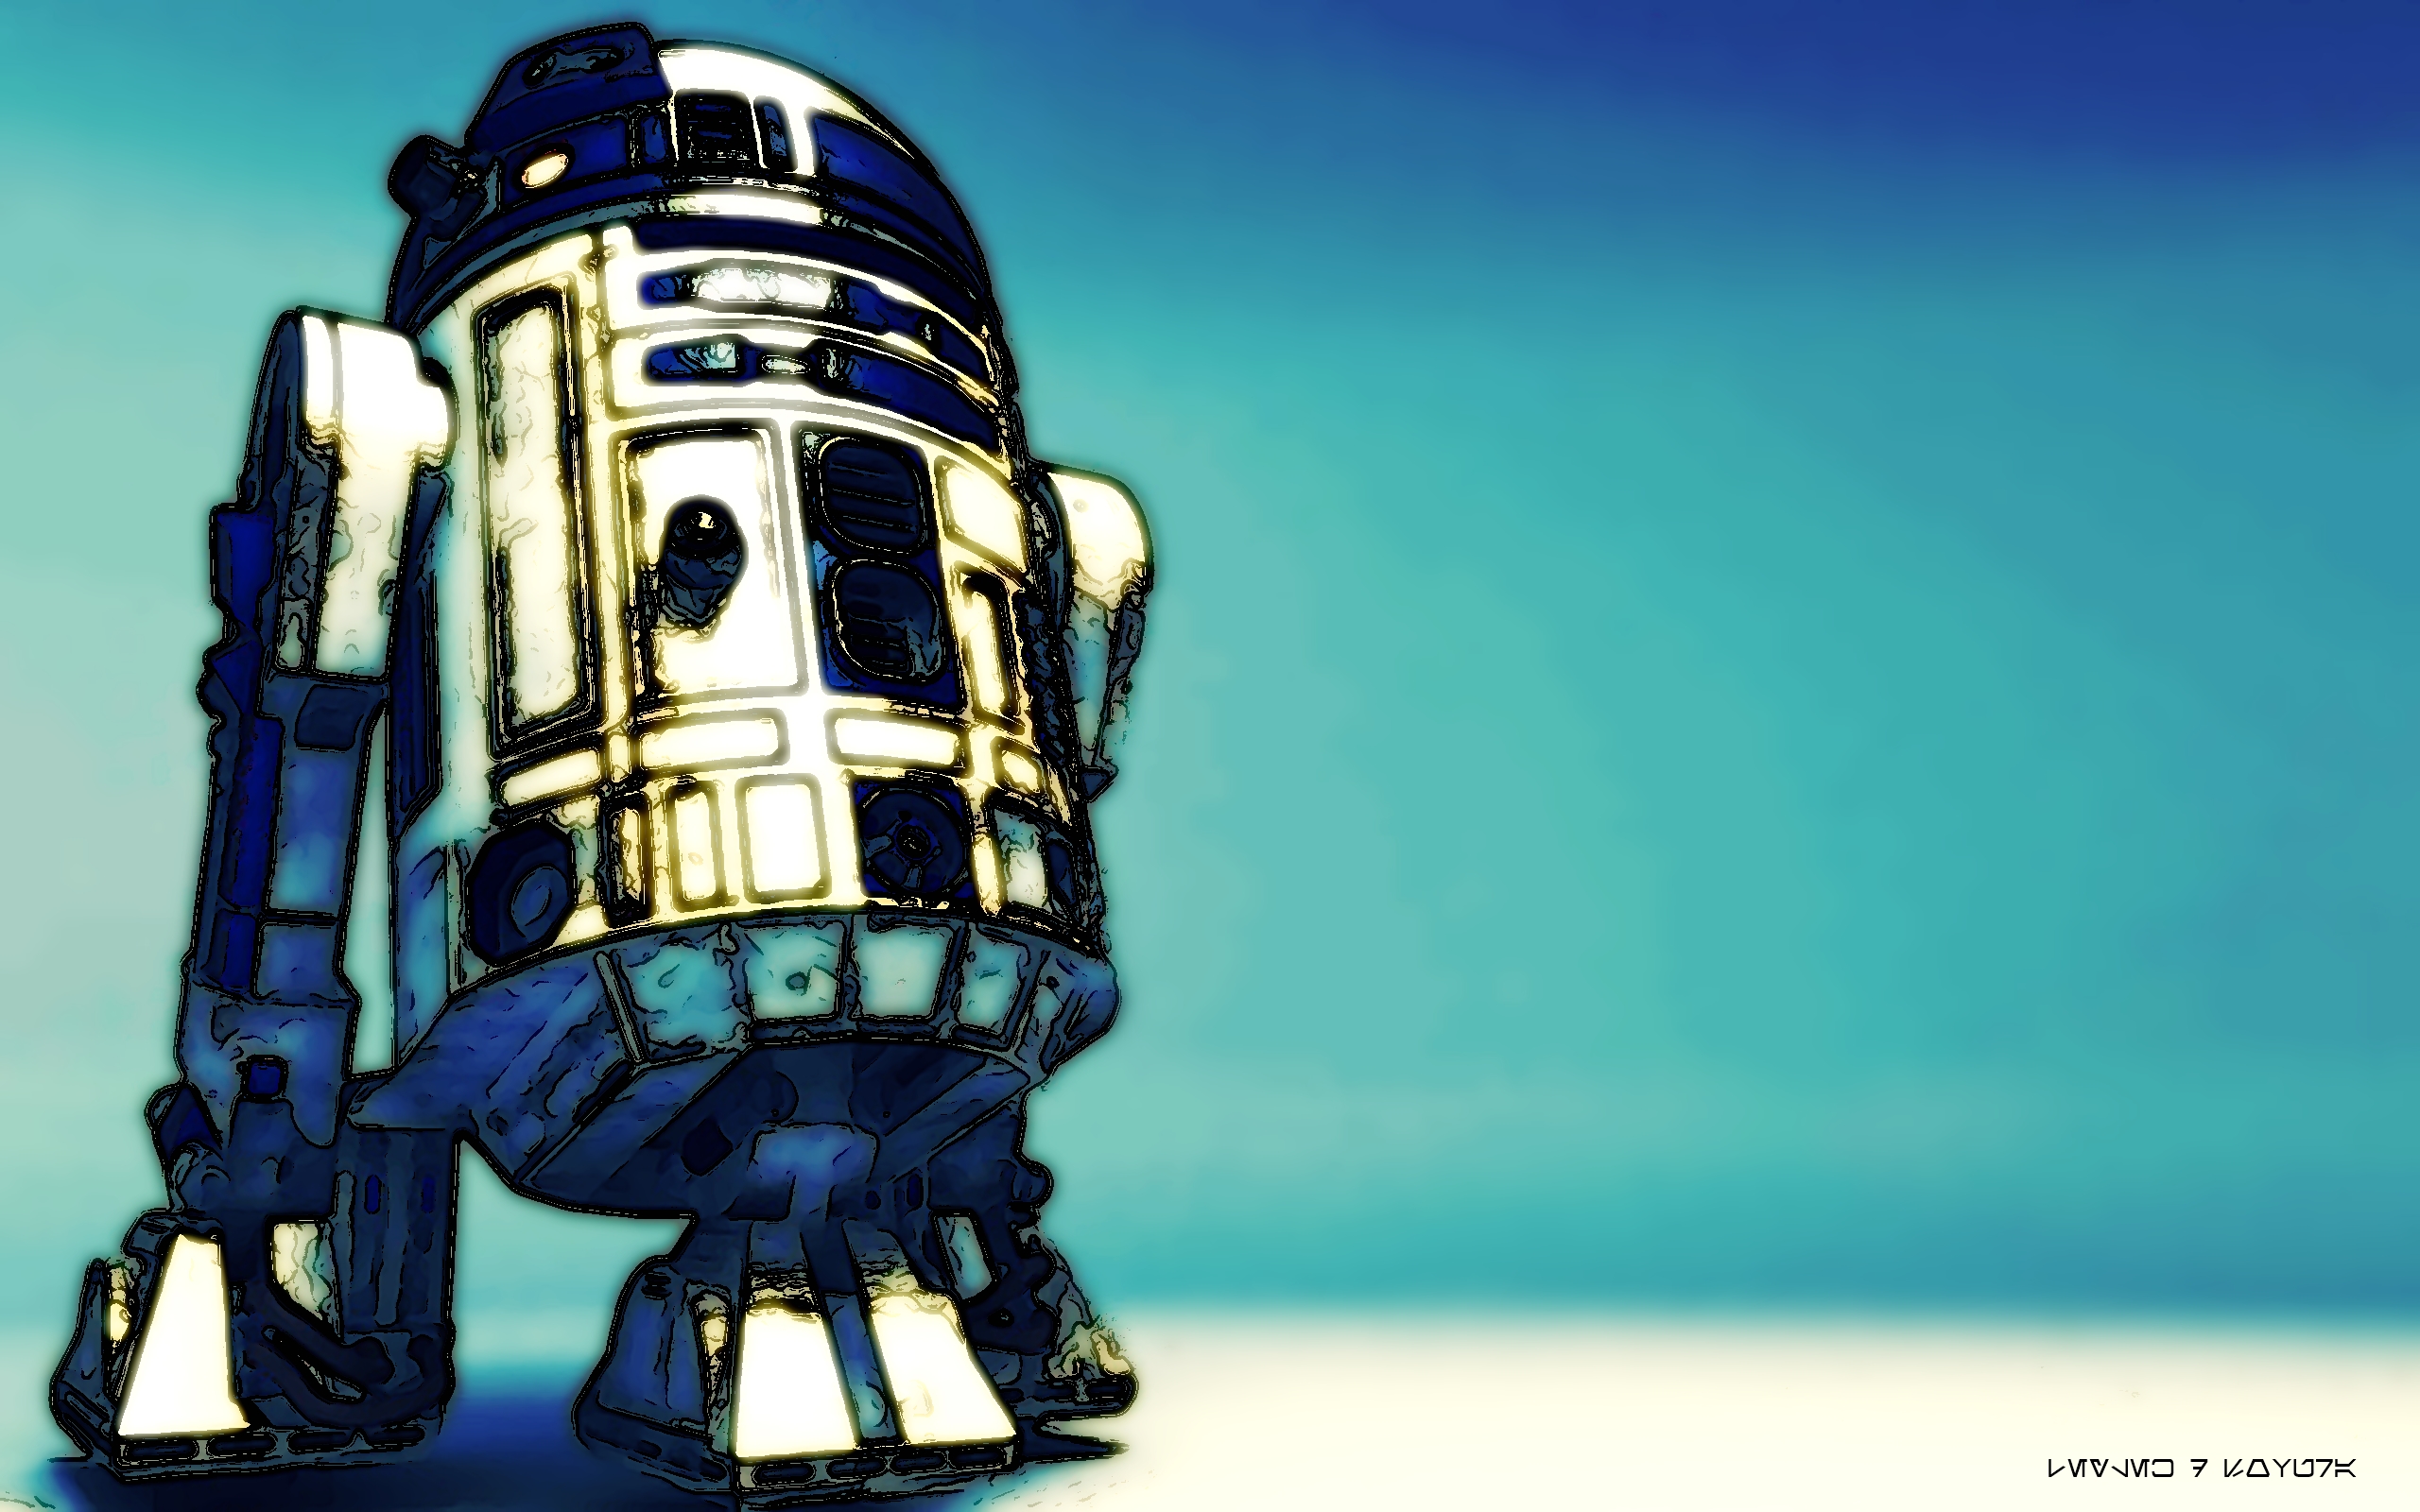 General 2560x1600 Leylek.D.Sovura artwork R2-D2 Star Wars Star Wars Droids blue simple background digital art watermarked